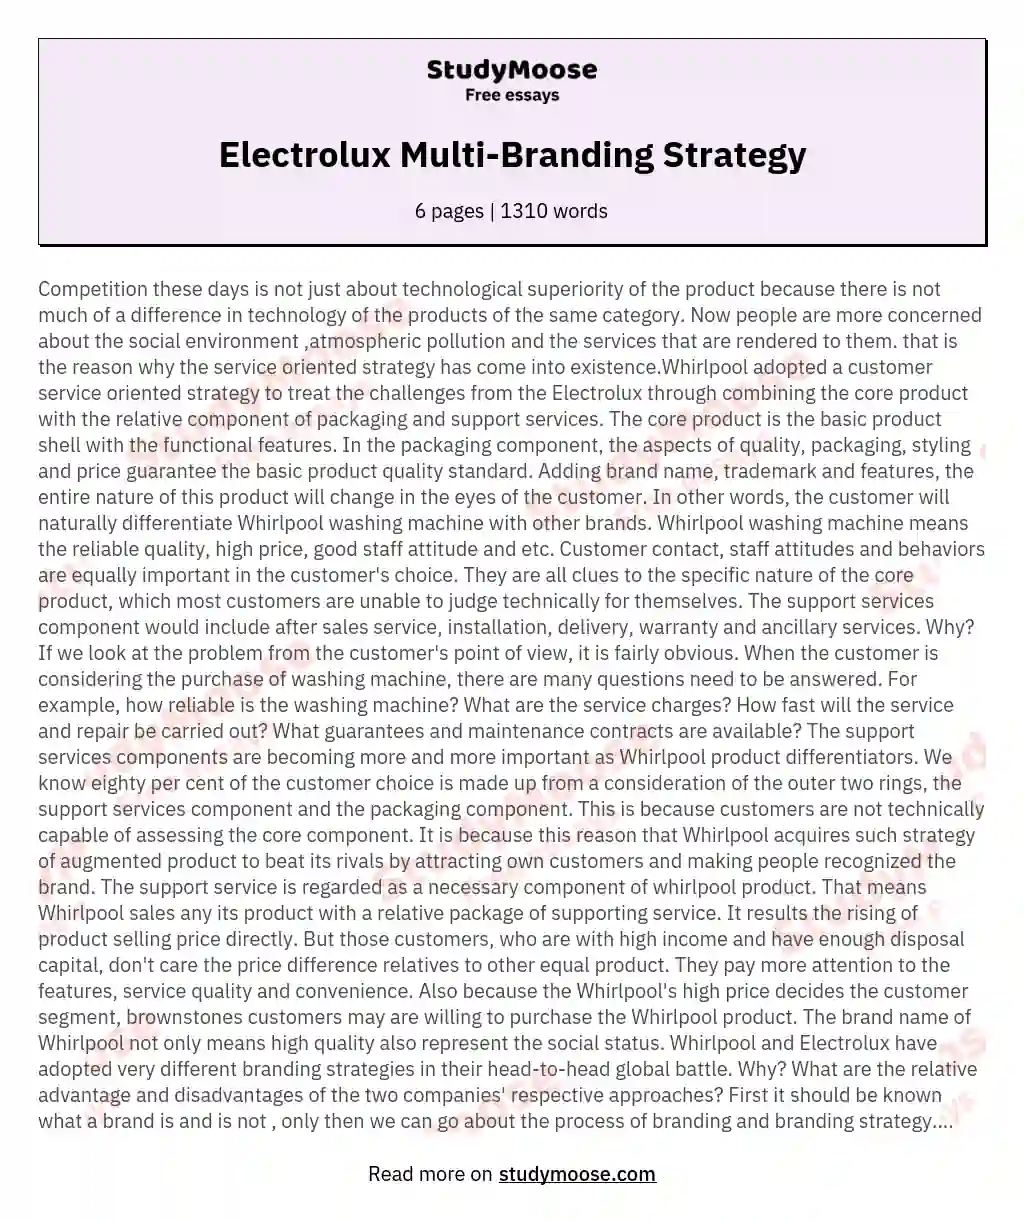 Electrolux Multi-Branding Strategy essay